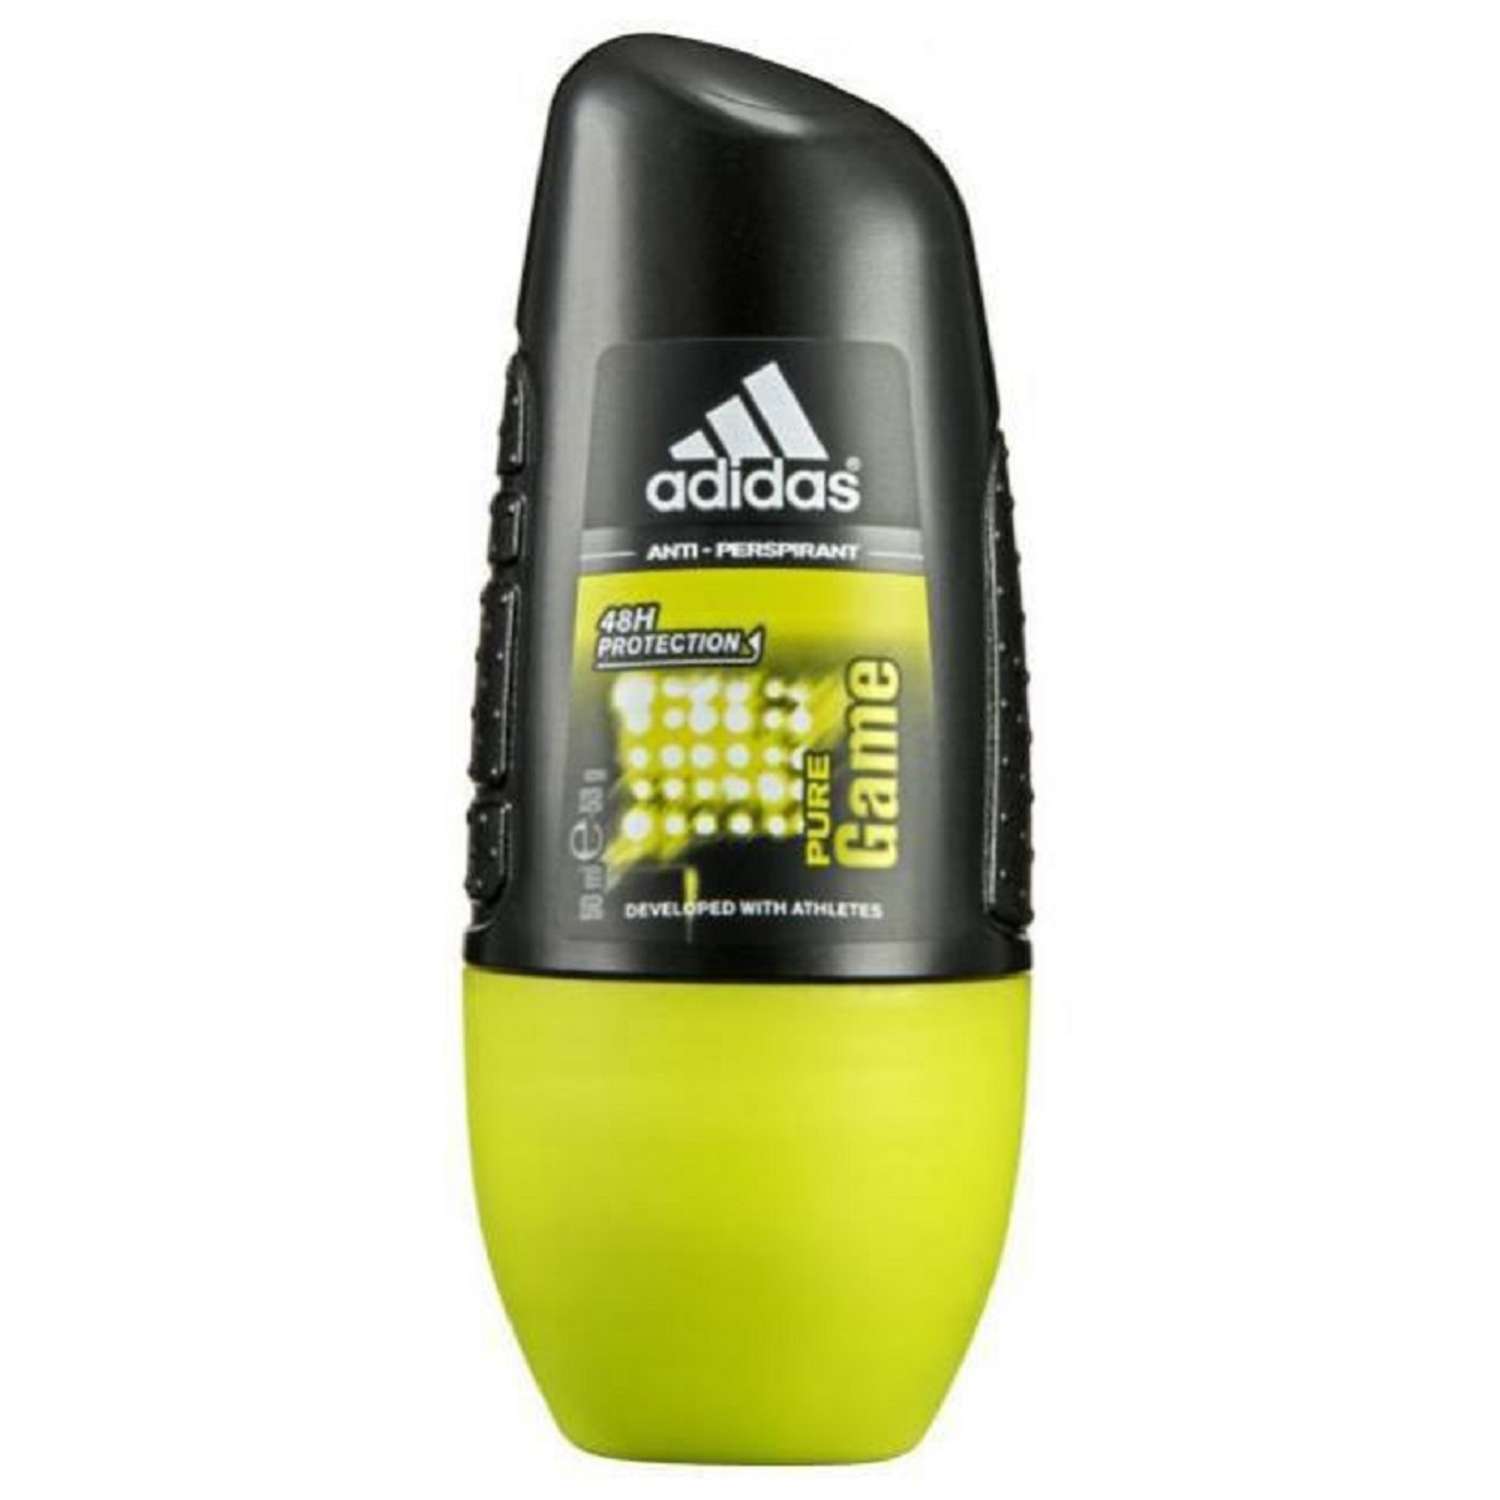 Adidas Anti Perspirant 50 ml. Дезодорант adidas мужской шариковый. Adidas антиперспирант мужской ролик. Антиперспирант adidas Fruity. Антиперспирант адидас